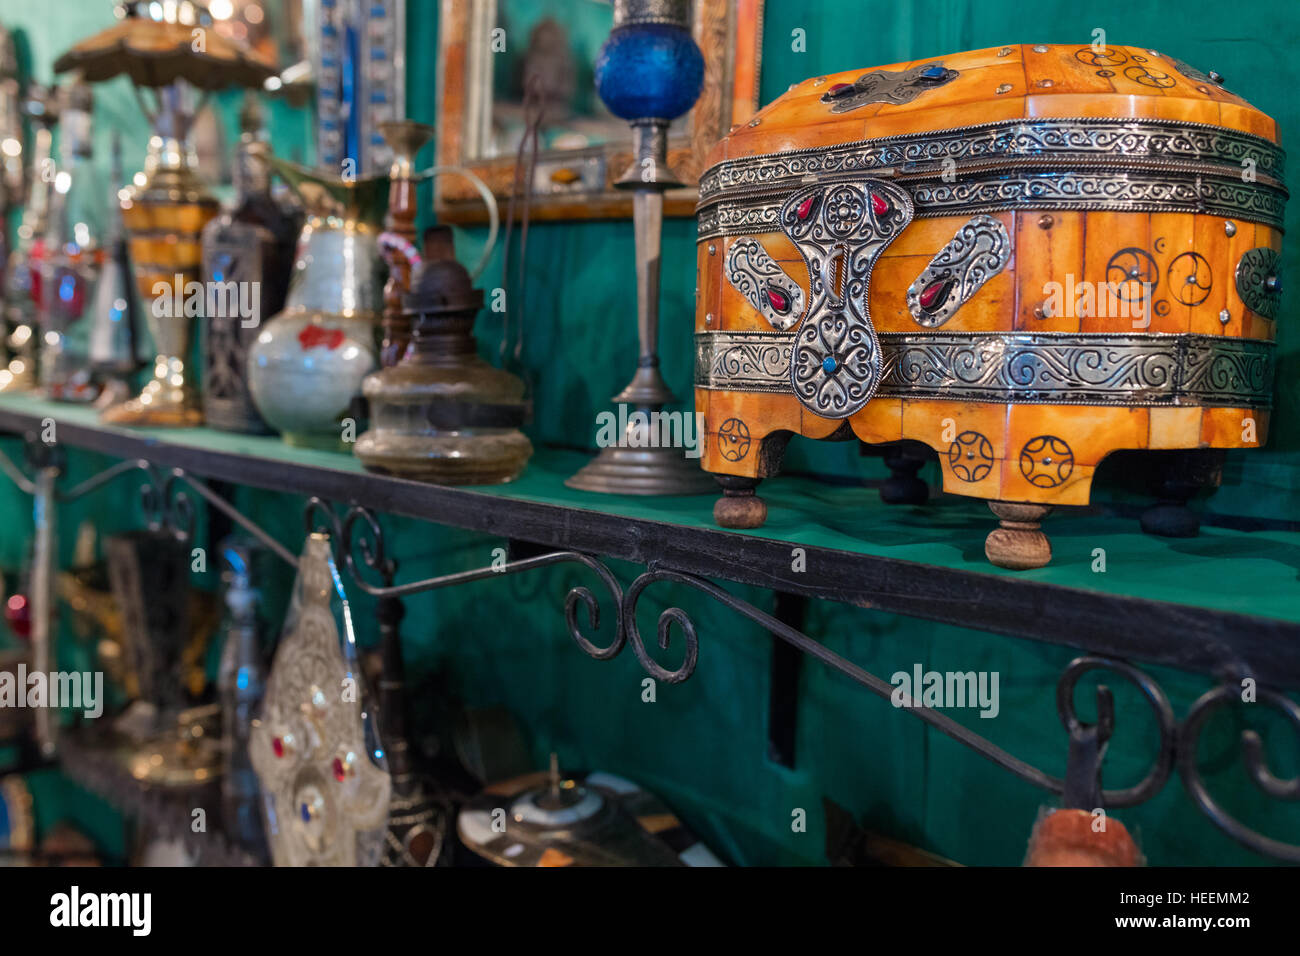 Metal works shop, Fes, Morocco Stock Photo